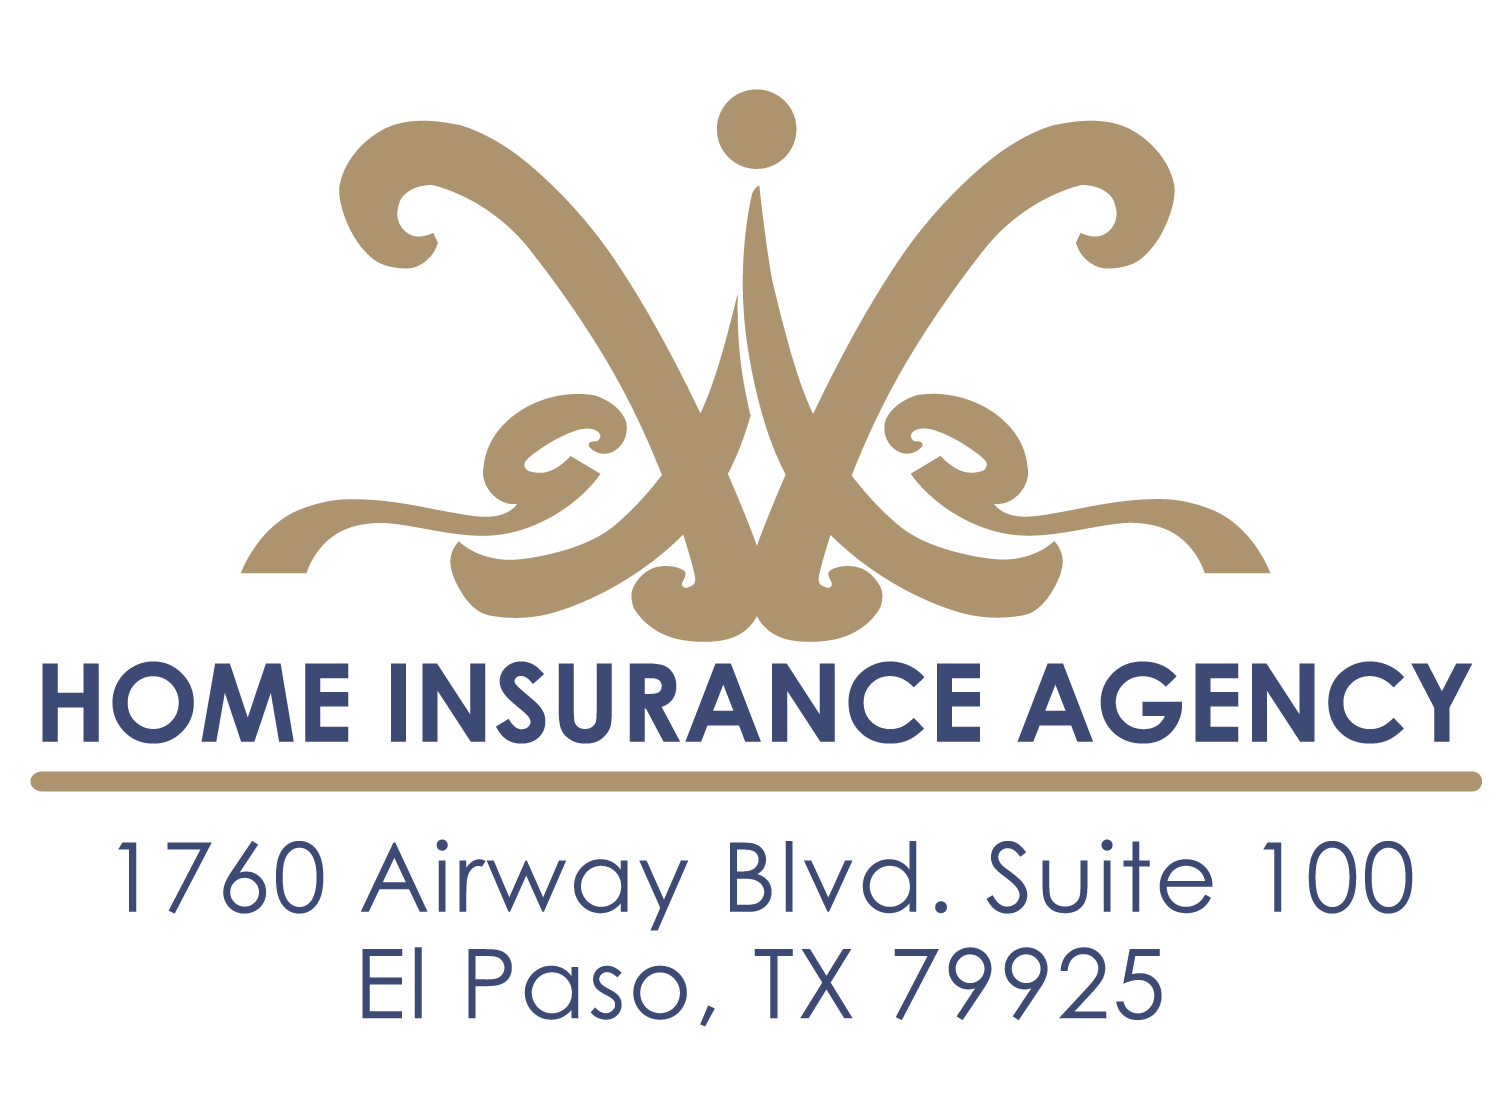 Home Insurance Agency